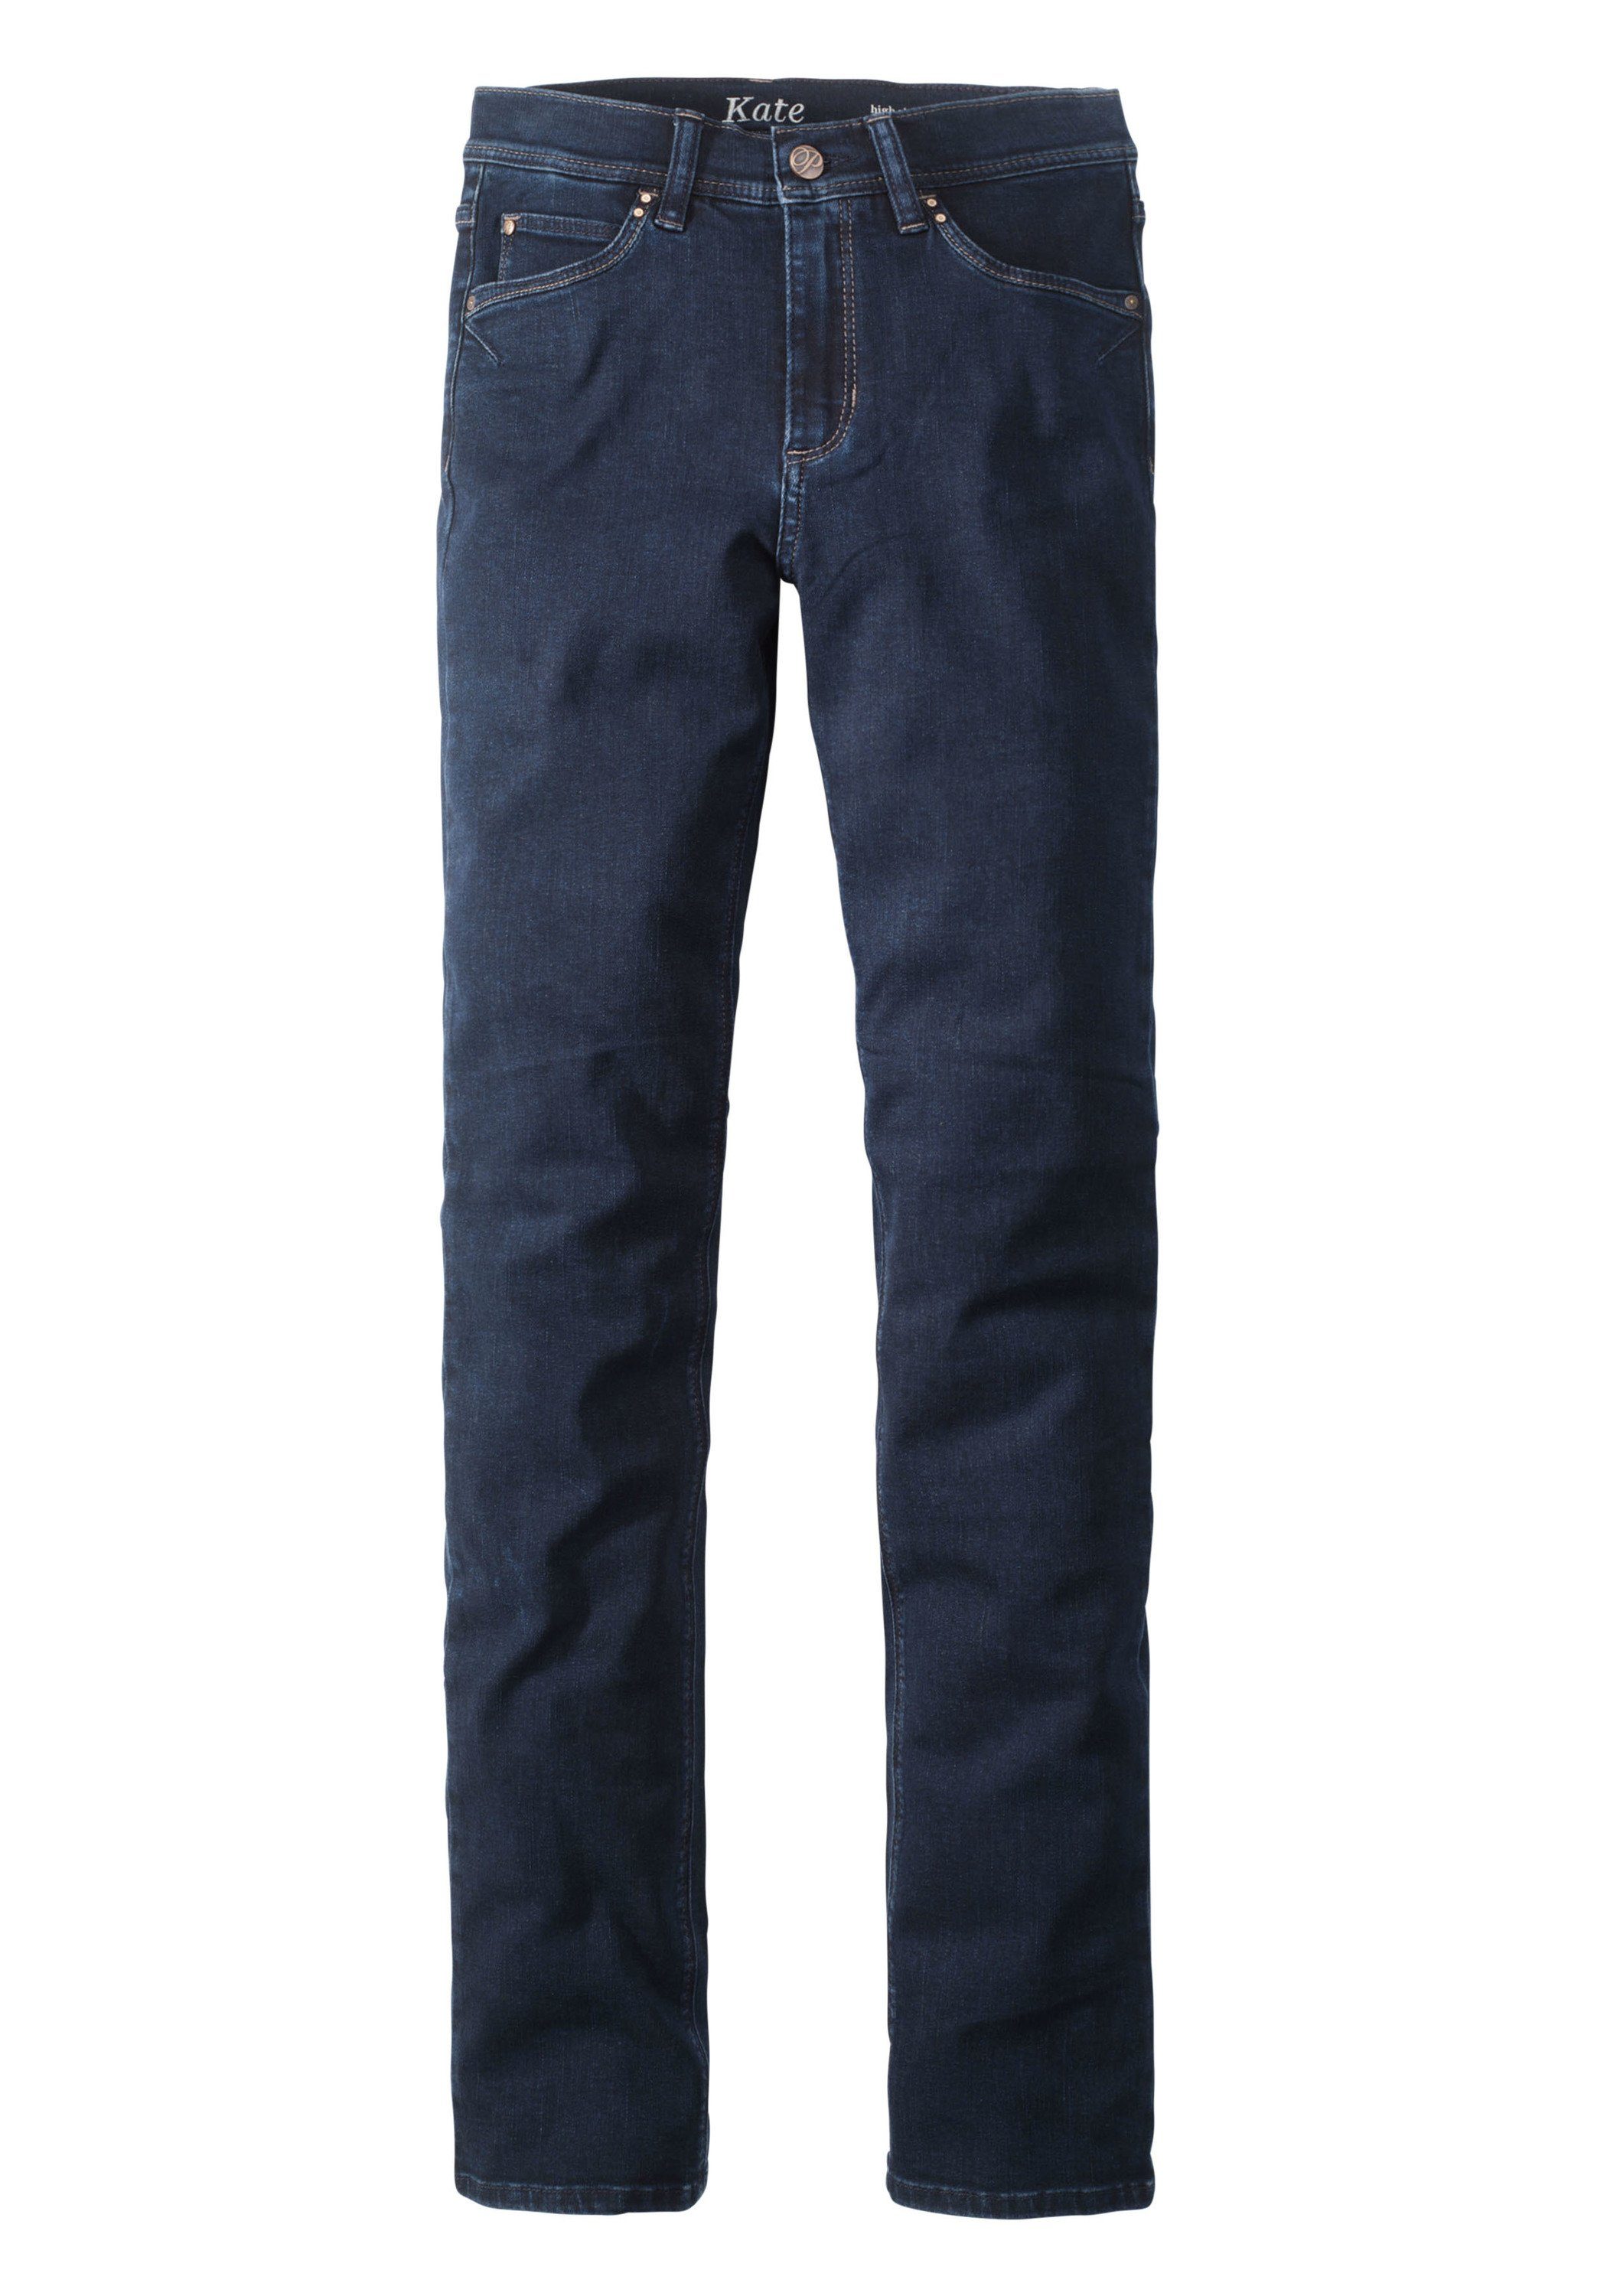 Paddock's 5-Pocket-Jeans KATE blue / used black